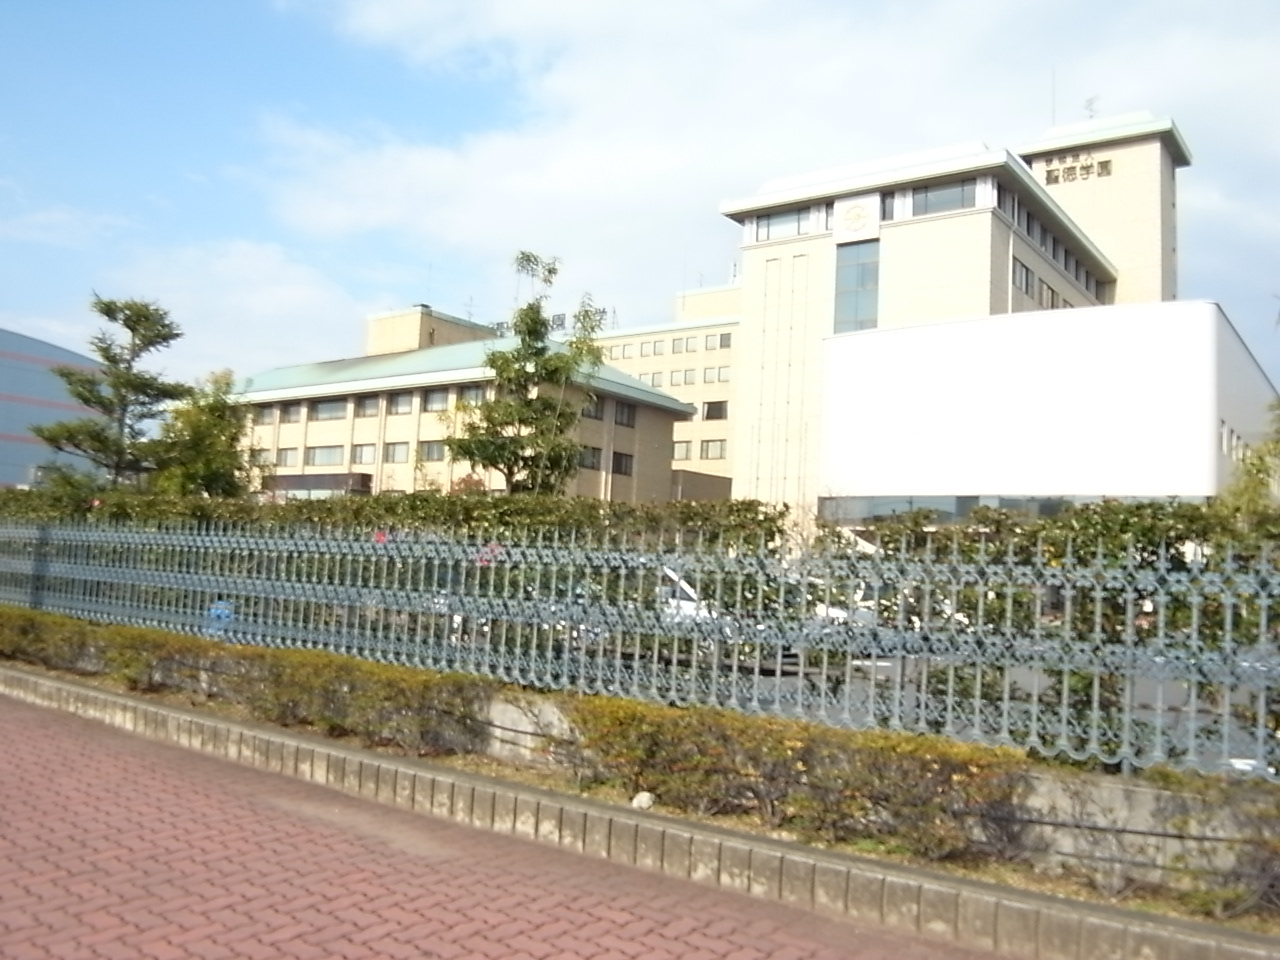 library. 1471m to Gifu Shotoku Gakuen University Gifu campus library (library)